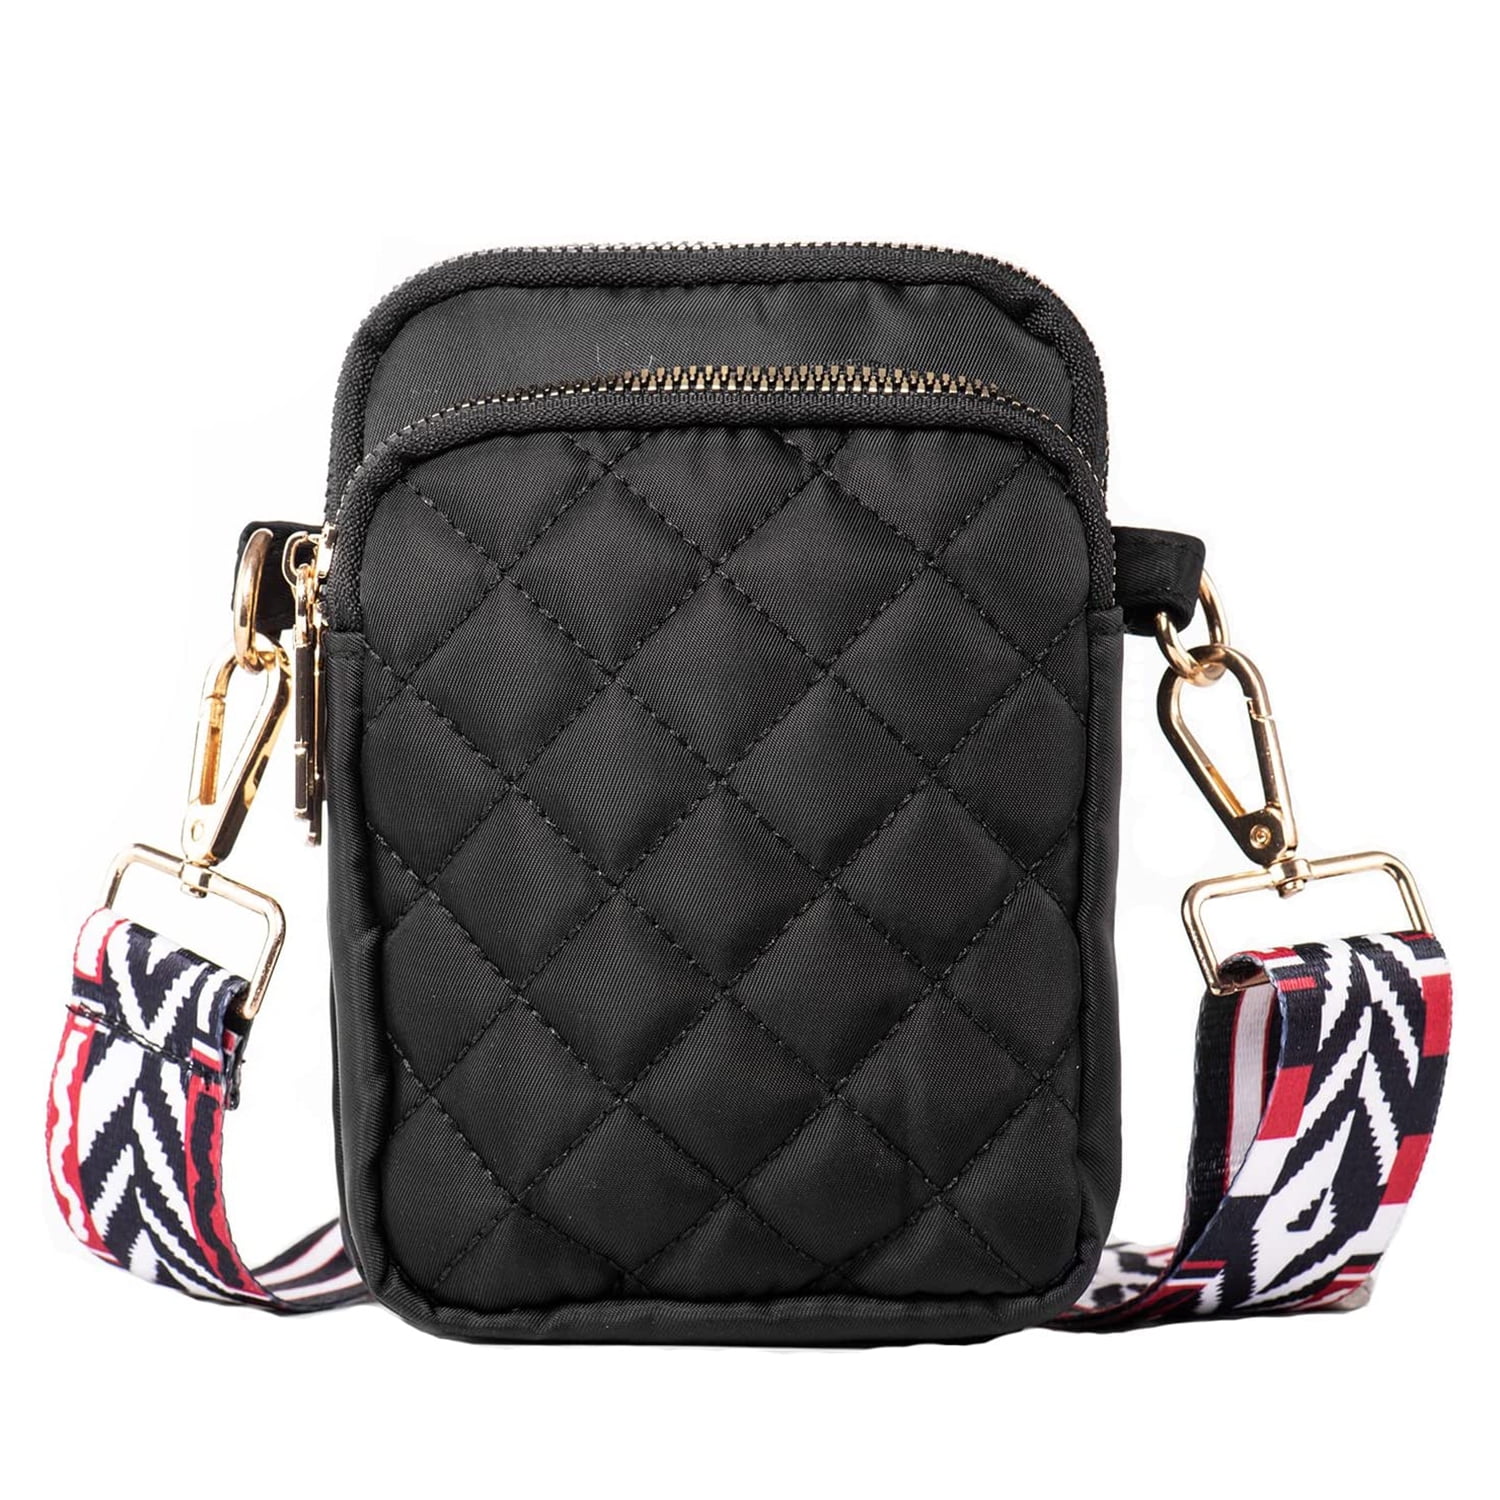 Ladies Cross Body Bag, Shoulder Bag with Adjustable Wide Strap and Chain-  Multipurpose Shoulder & Crossbody Bags for Women(Black)